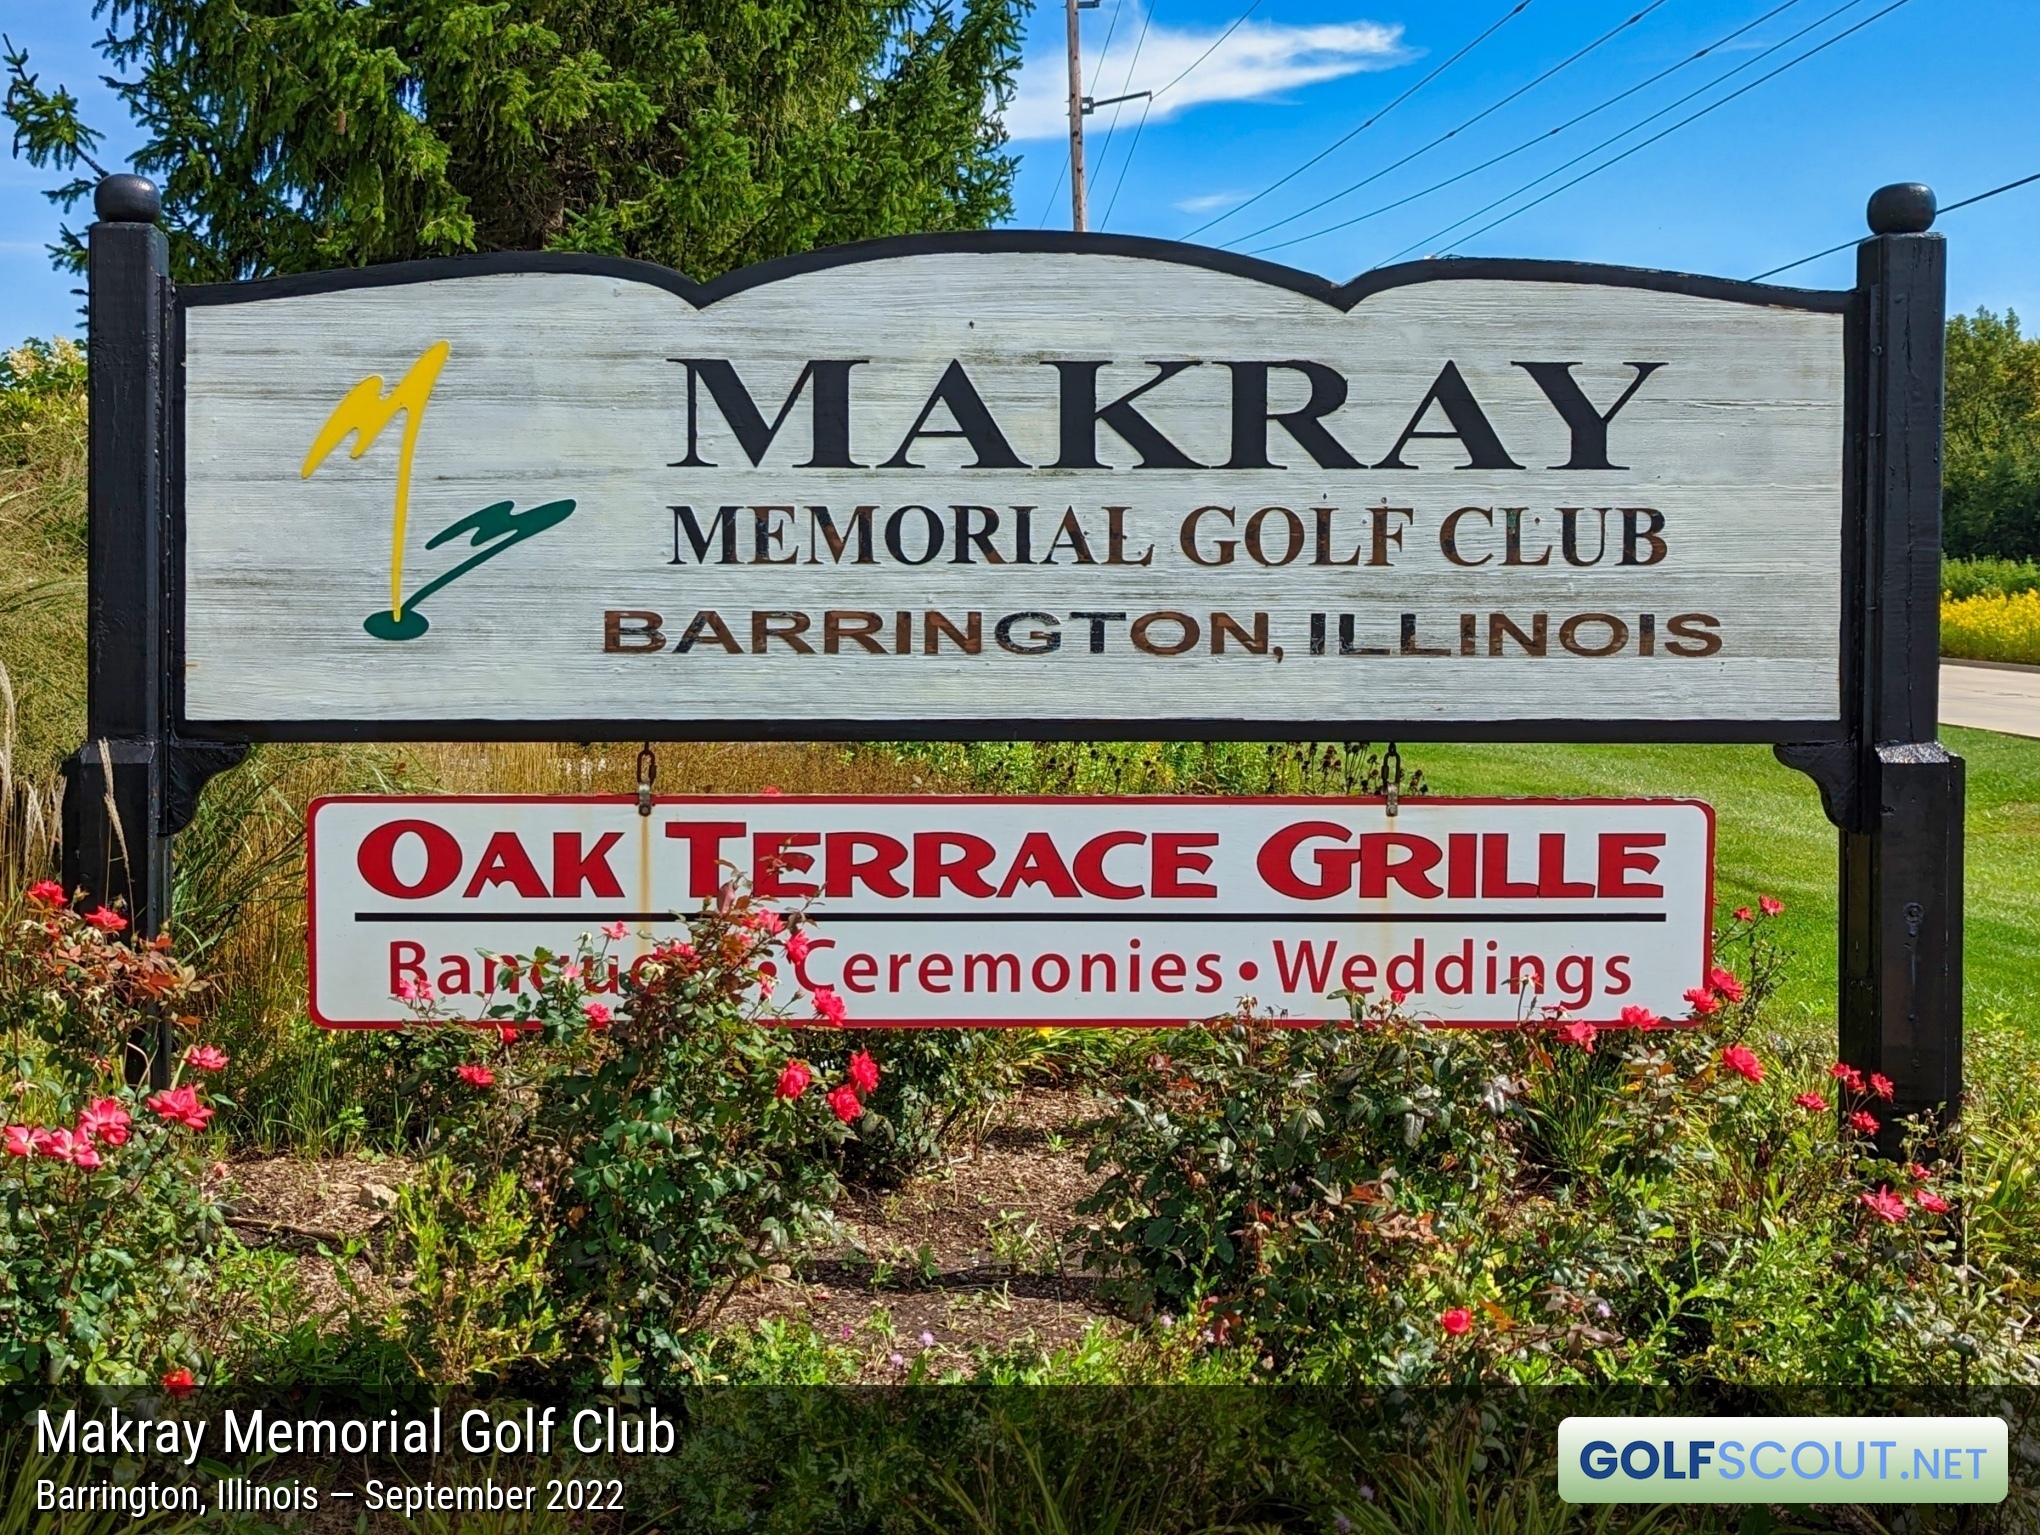 Sign at the entrance to Makray Memorial Golf Club